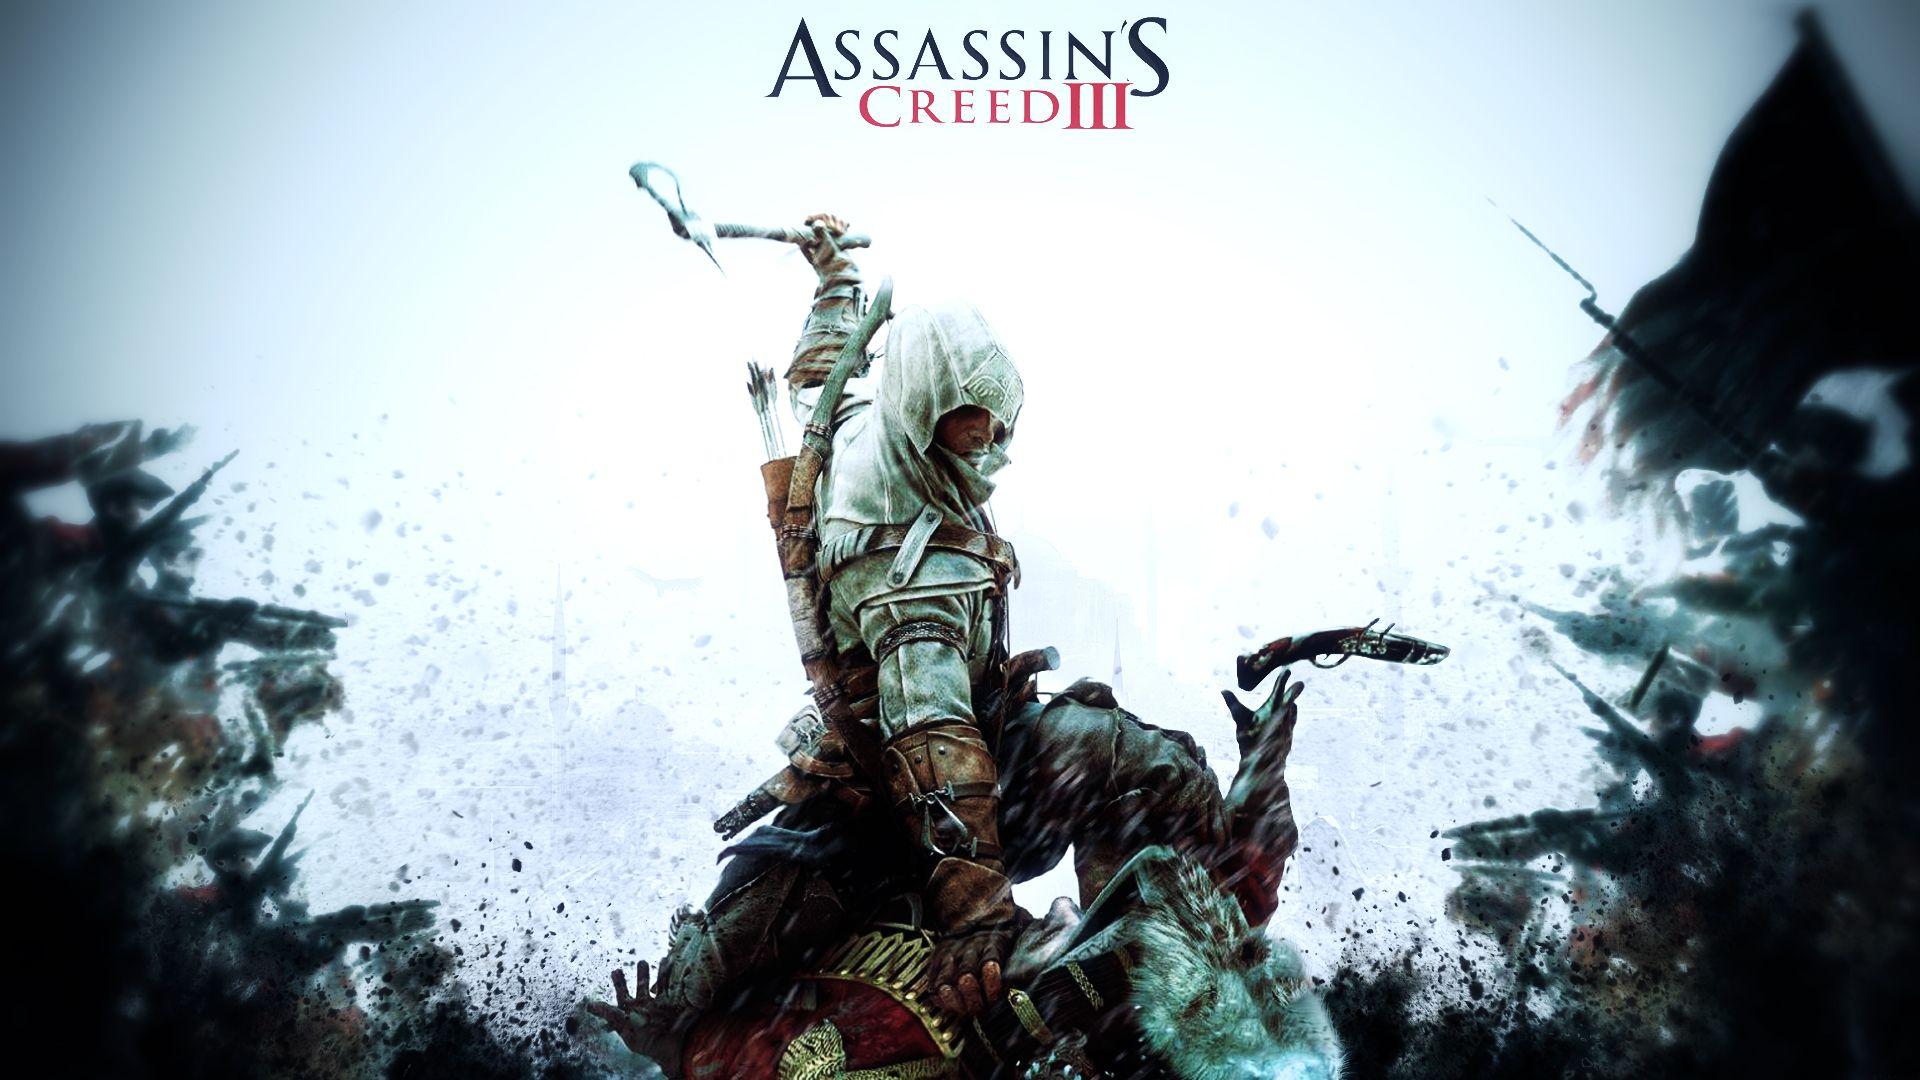 Assassin's Creed III HD Wallpaper 3 X 1080